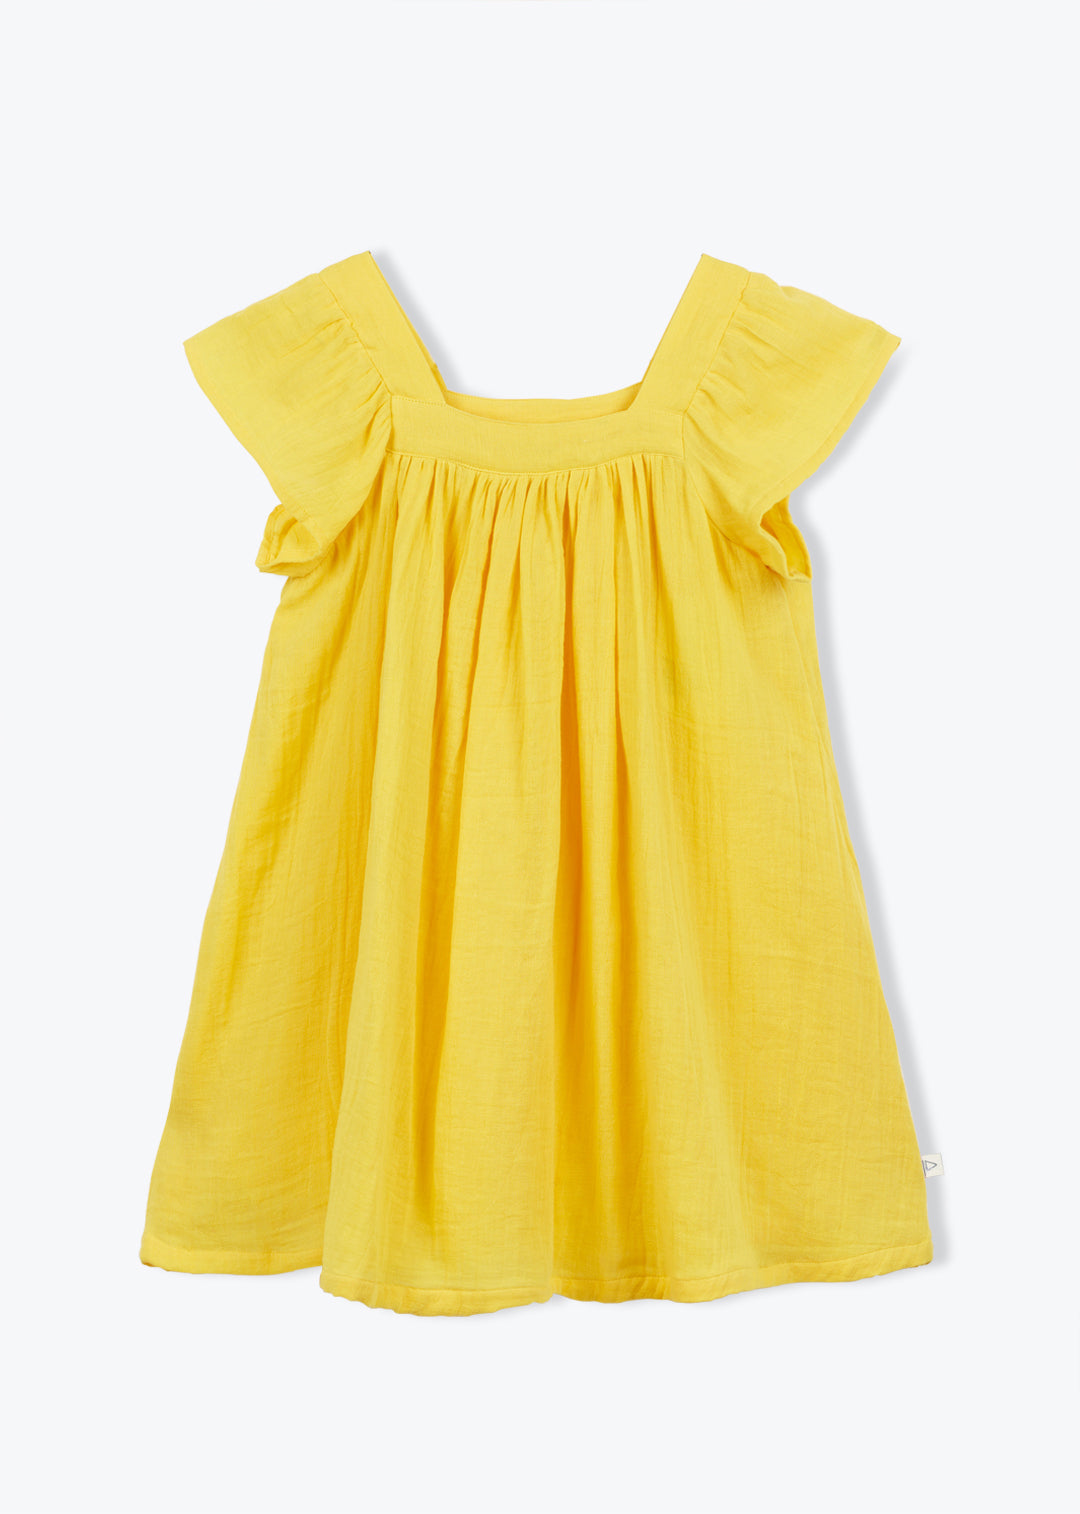 Double Veil Dress Flavie Yellow - يلهث